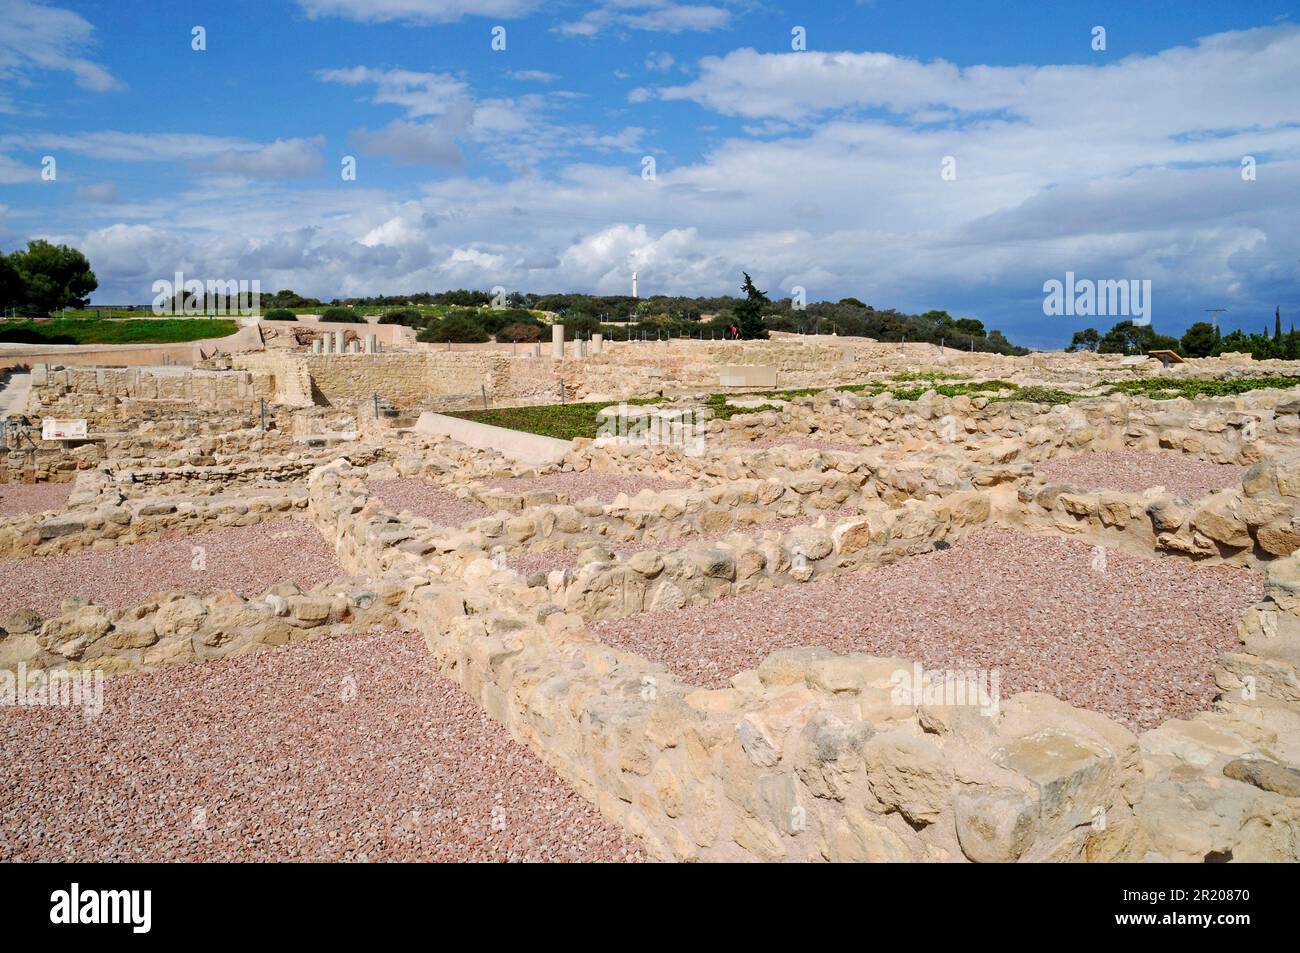 Yacimiento Arqueologico Lucentum, archaeological roman excavation site, Lucentum, La Albufereta, Alicante, Costa Blanca, Province of Alicante, Spain Stock Photo